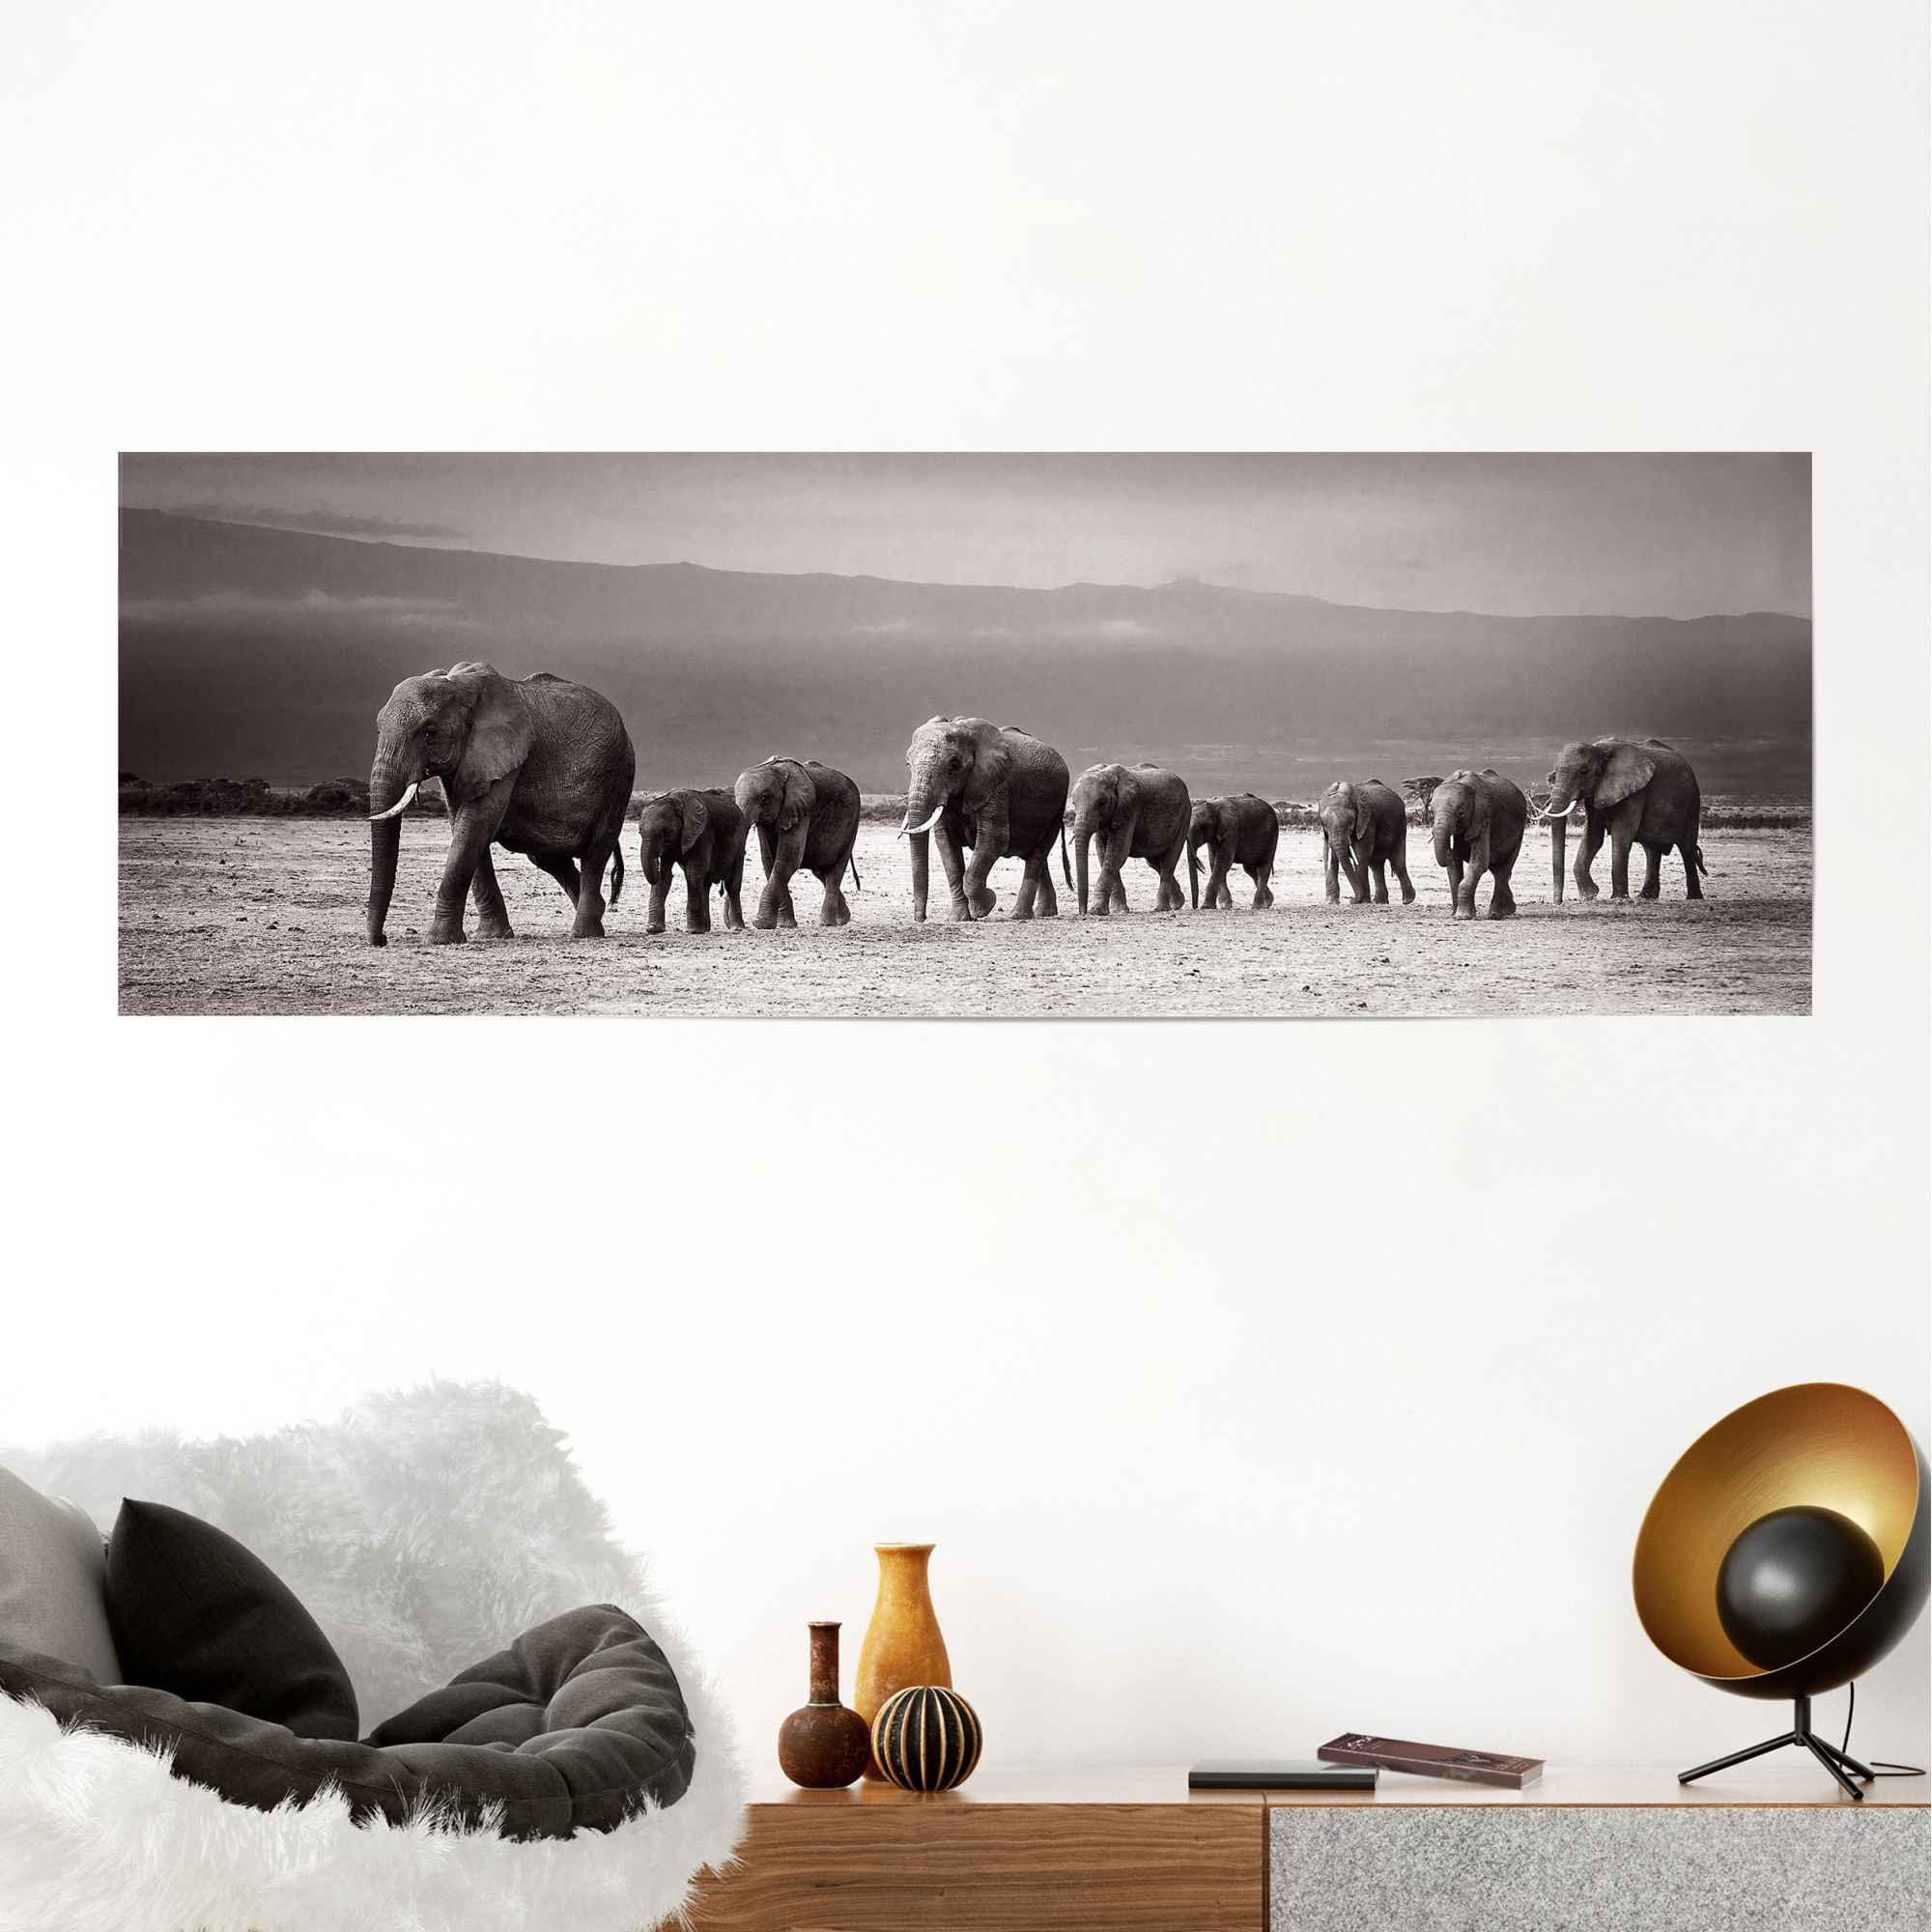 St) Elefantenherde auf Reise, (1 Reinders! Poster